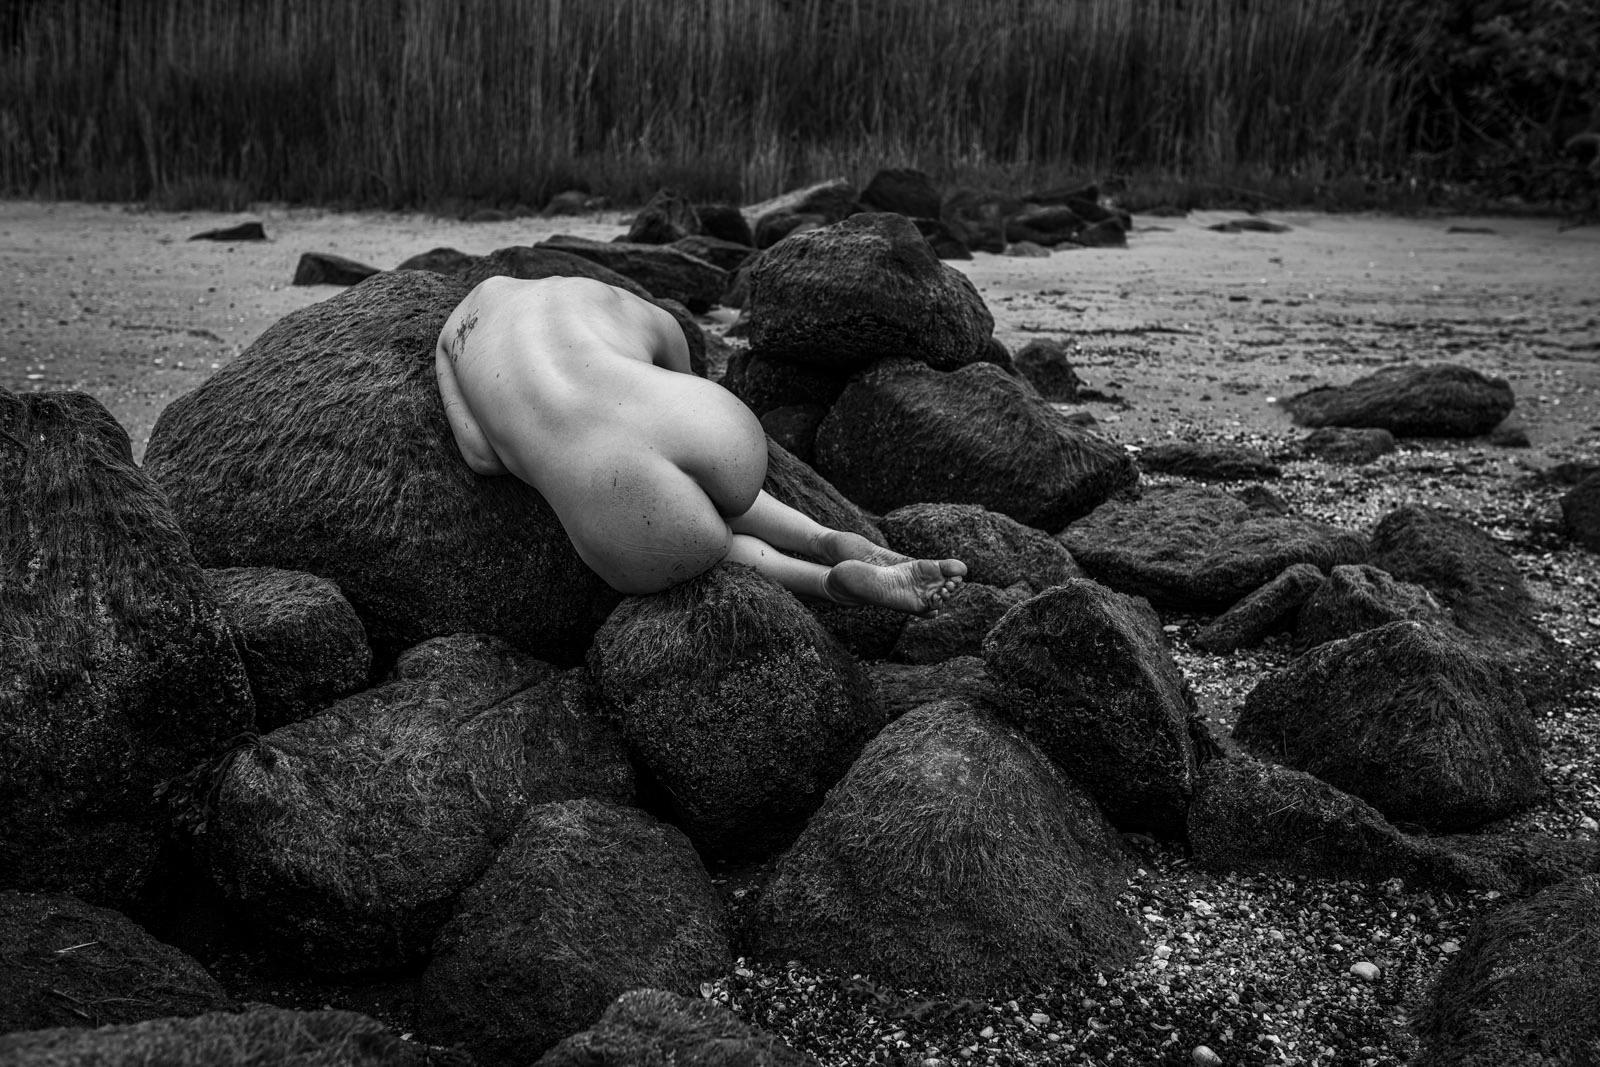 John Mazlish Black and White Photograph – "Body Rocks B&W"- Fine Art Aktfoto in der Natur